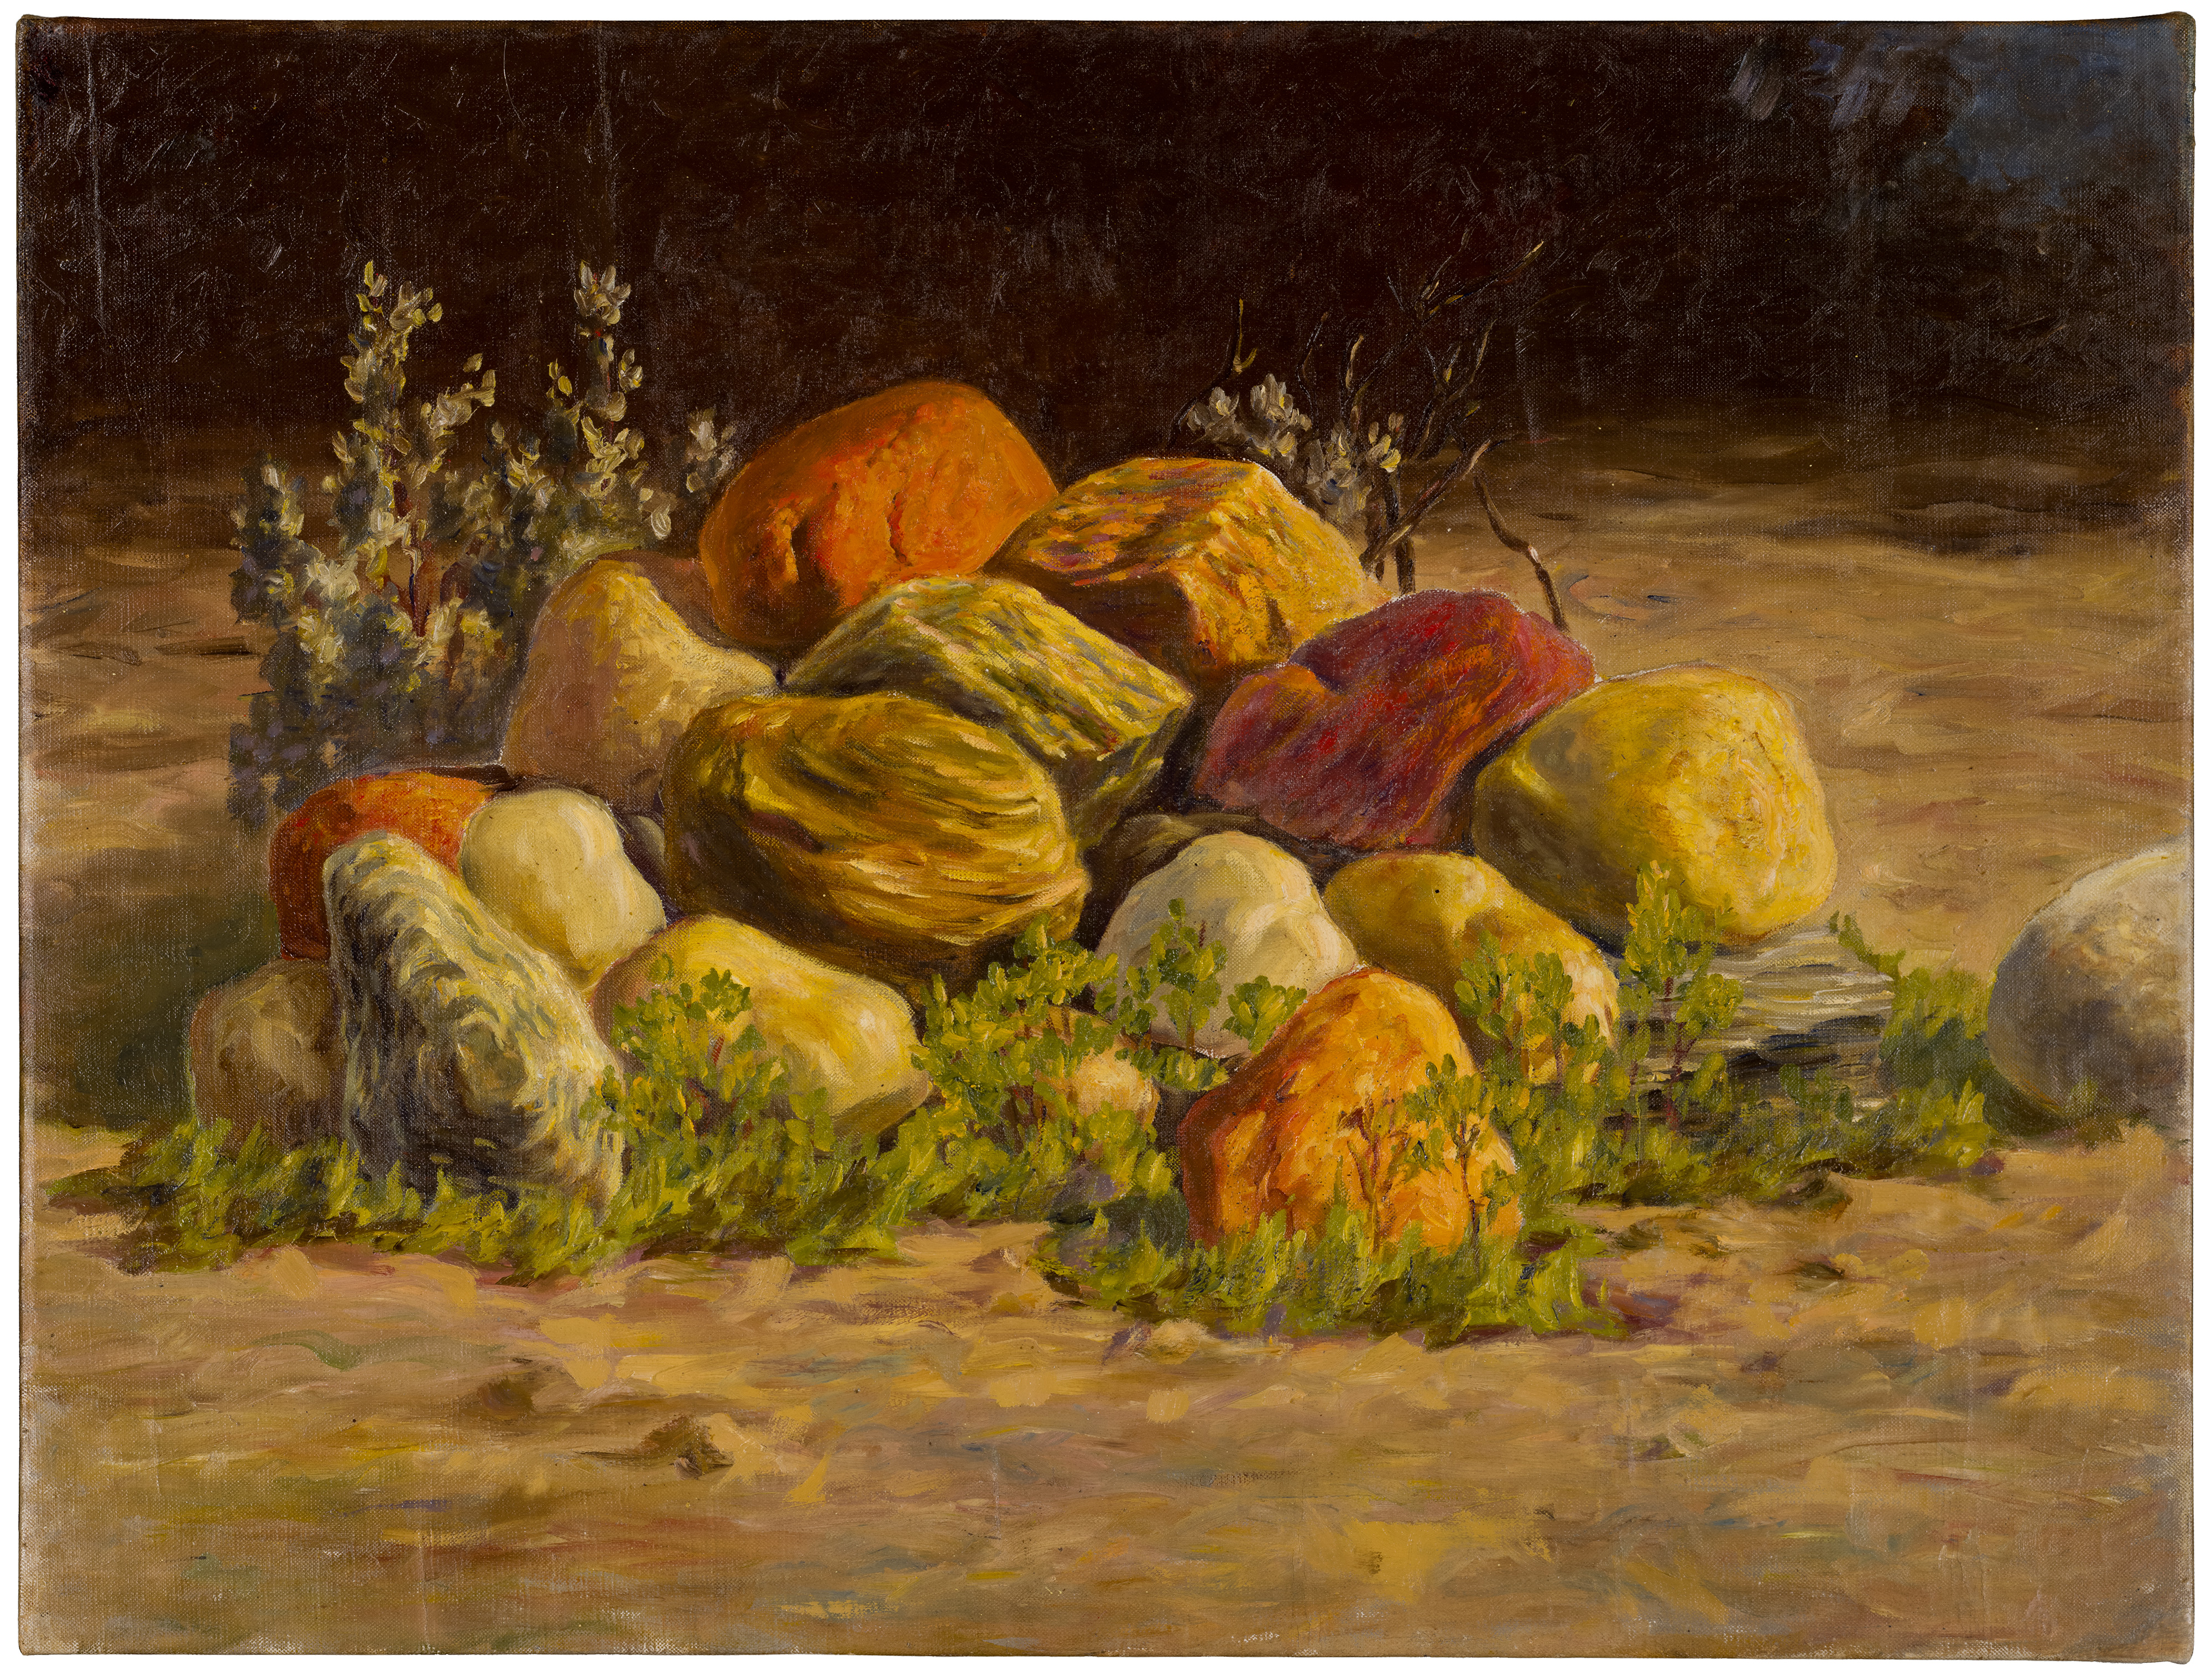 Clyfford Still, PH-45 (Field Rocks), 1925. Oil on canvas, 21 x 28 1/8 in. (53.3 x 71.4 cm), Clyfford Still Museum © City and County of Denver /ARS, NY 